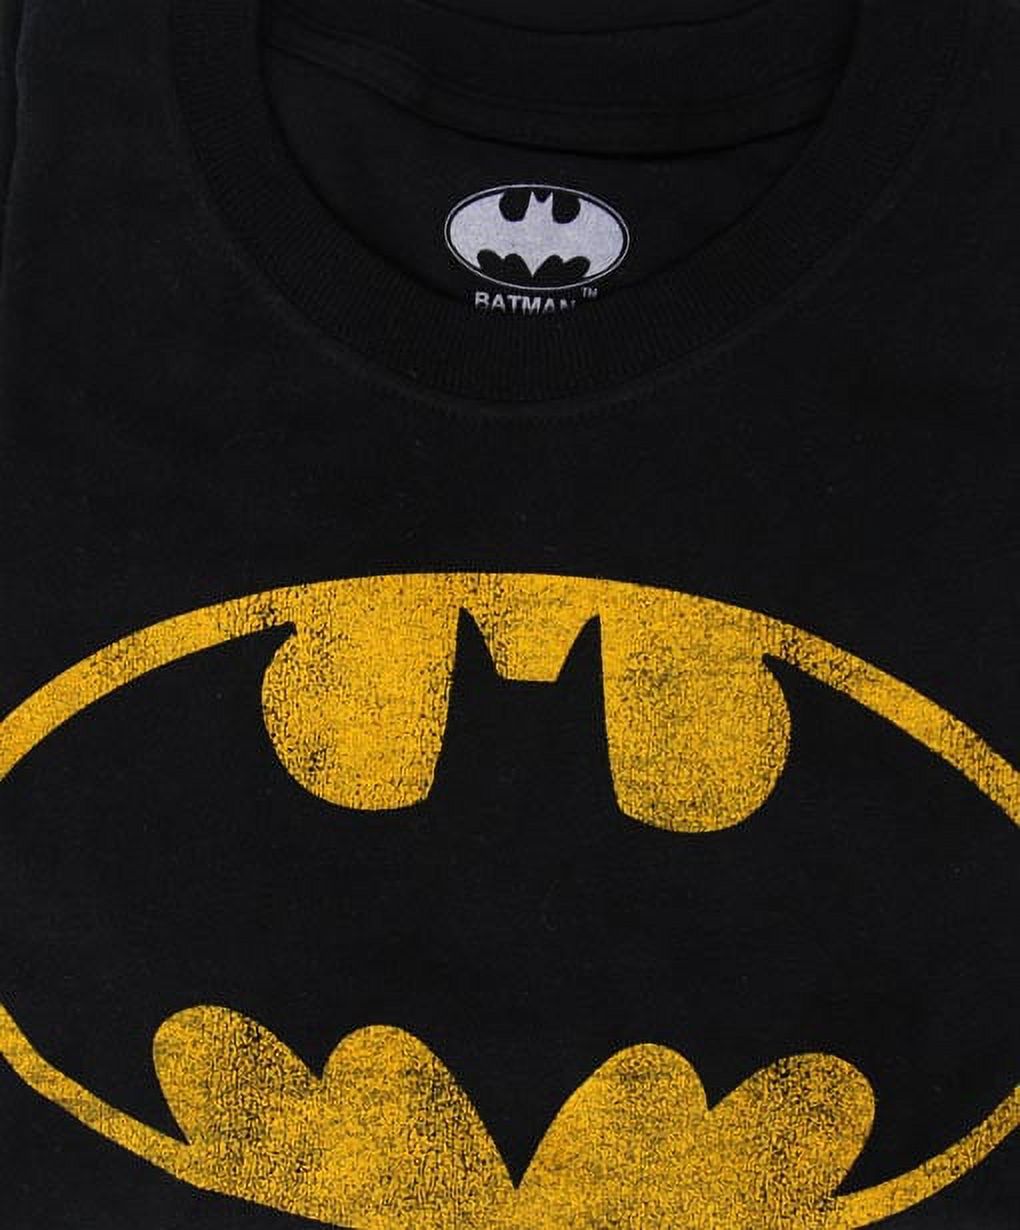 Batman distressed logo Men's tee shirt - image 2 of 4